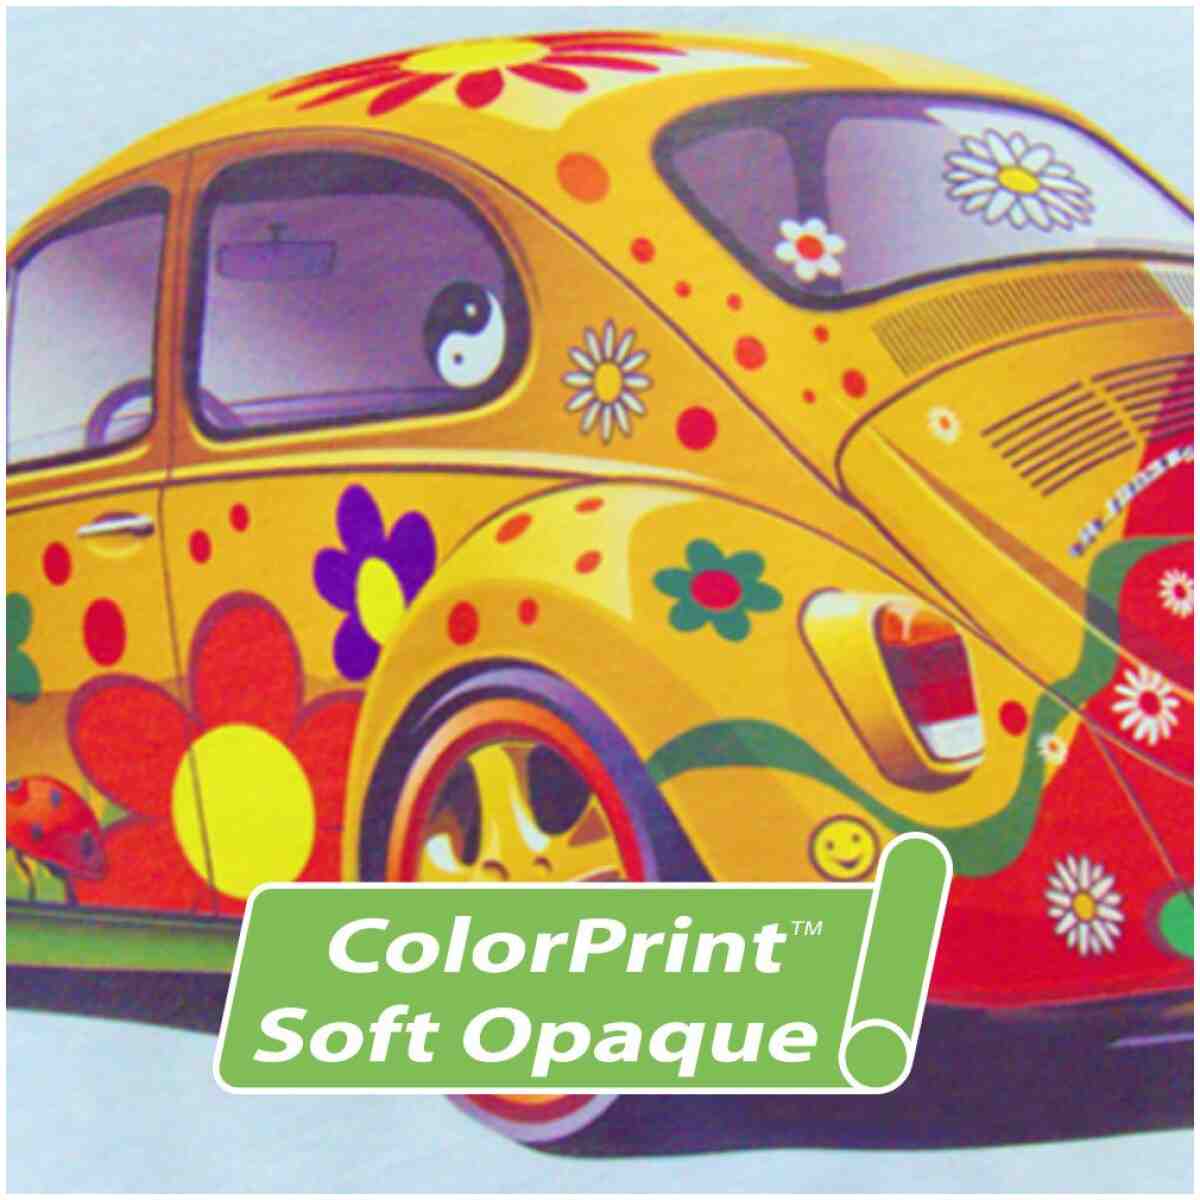 Colorprint™ Soft Opaque Print & Cut Digital Media (Htv) 59" - 25 Yard Roll SISER®